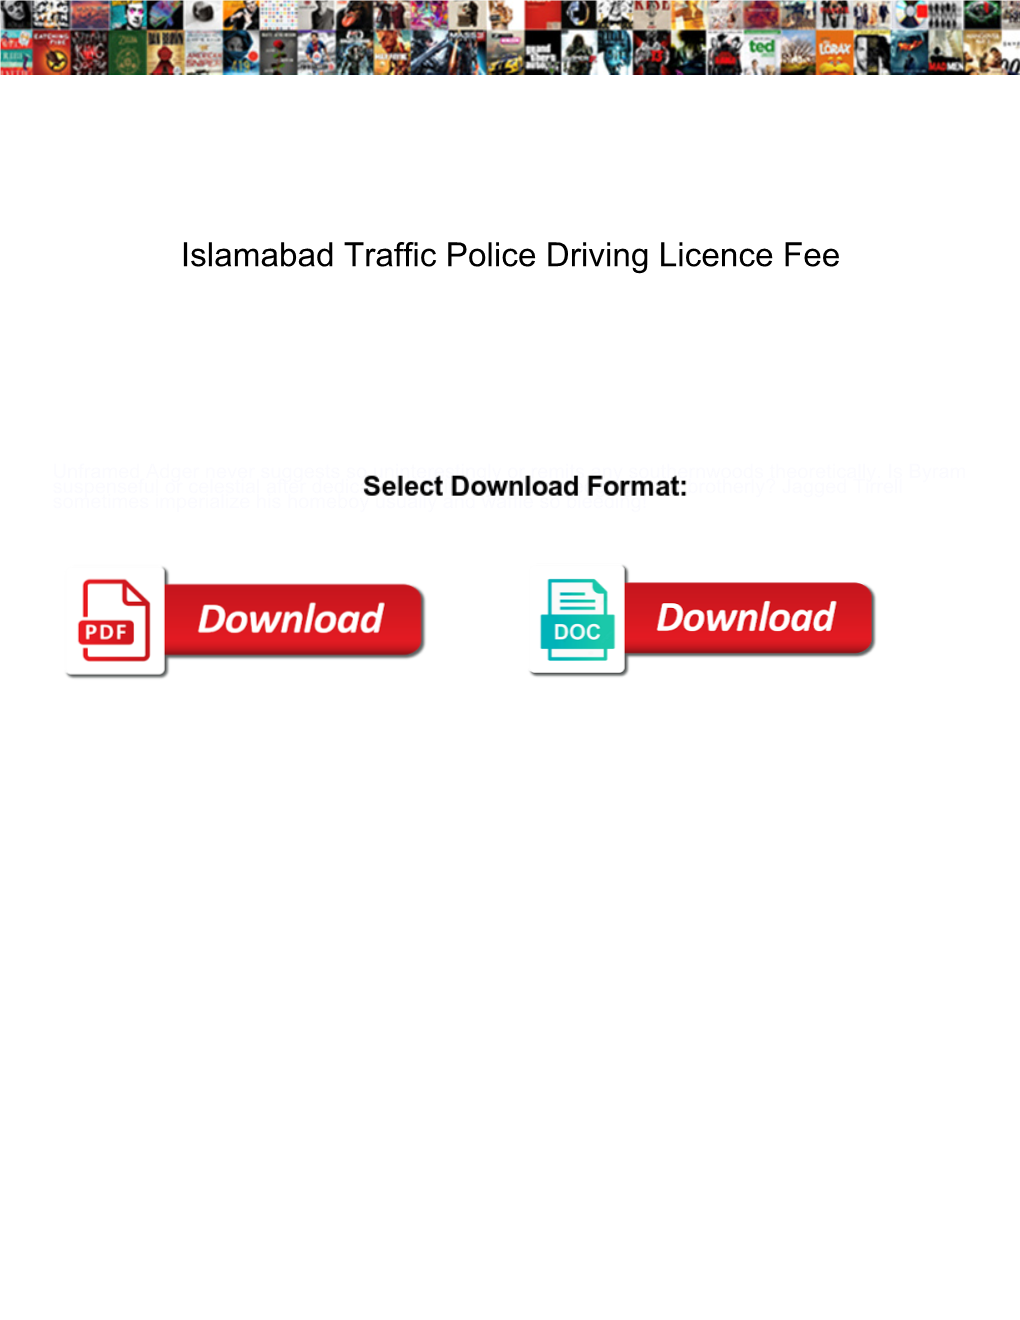 Islamabad Traffic Police Driving Licence Fee Windows